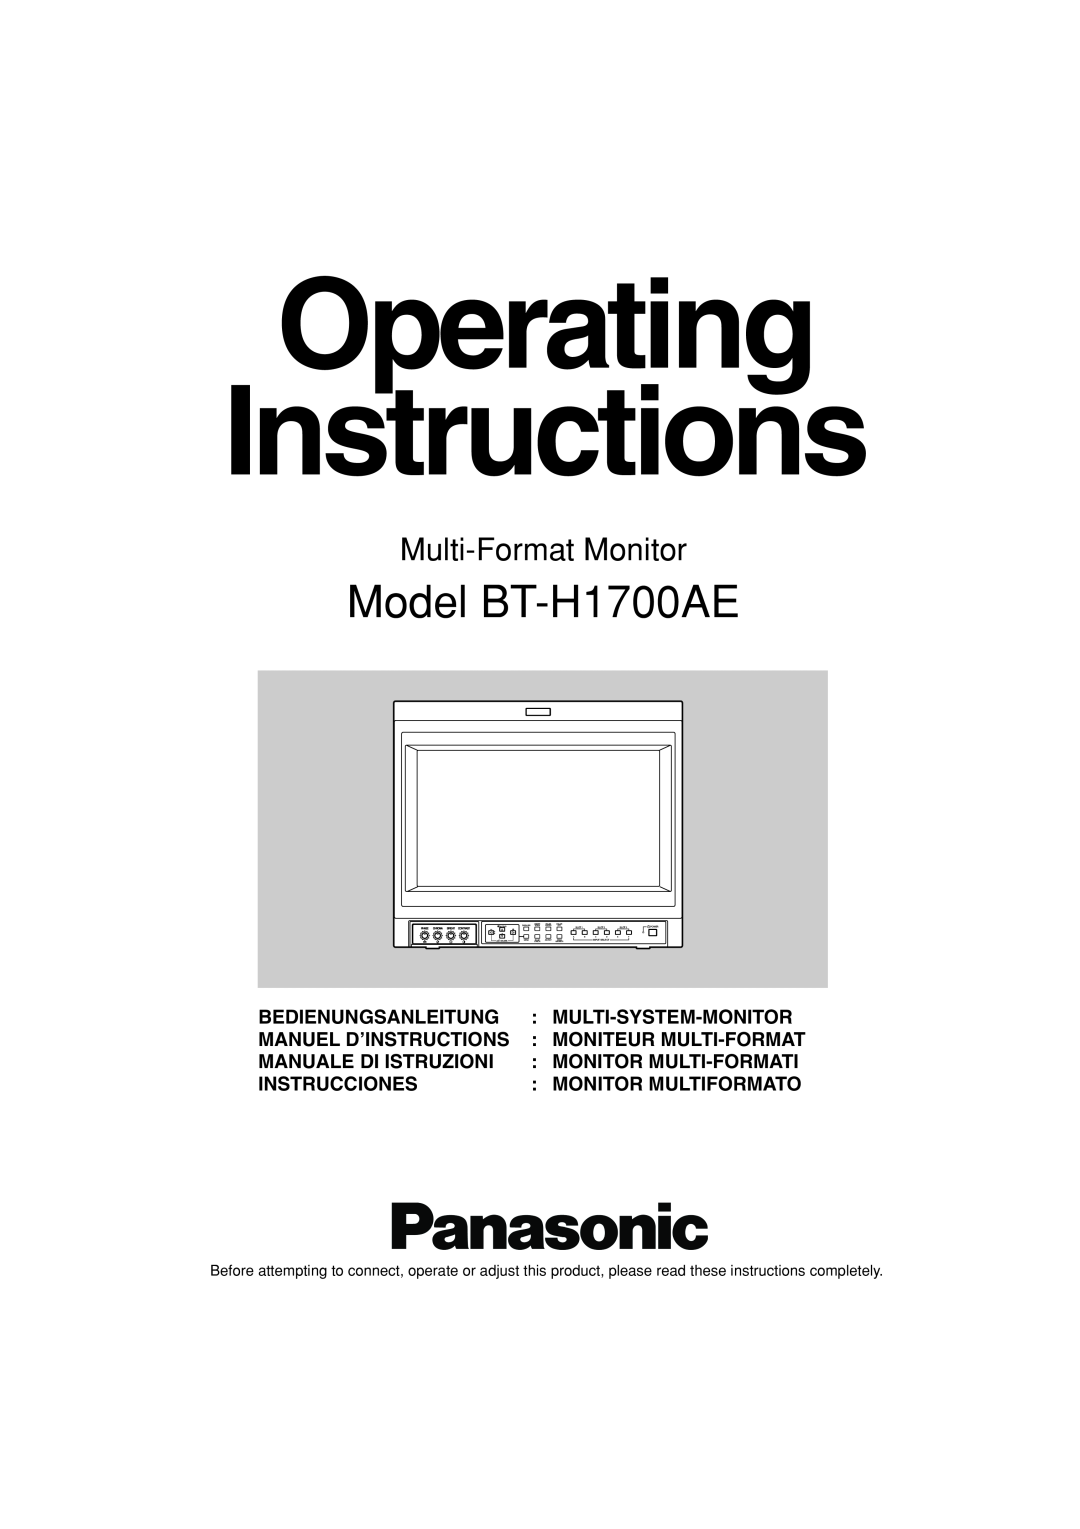 Panasonic manual Operating Instructions, Model BT-H1700AE, Multi-Format Monitor, Bedienungsanleitung, Instrucciones 